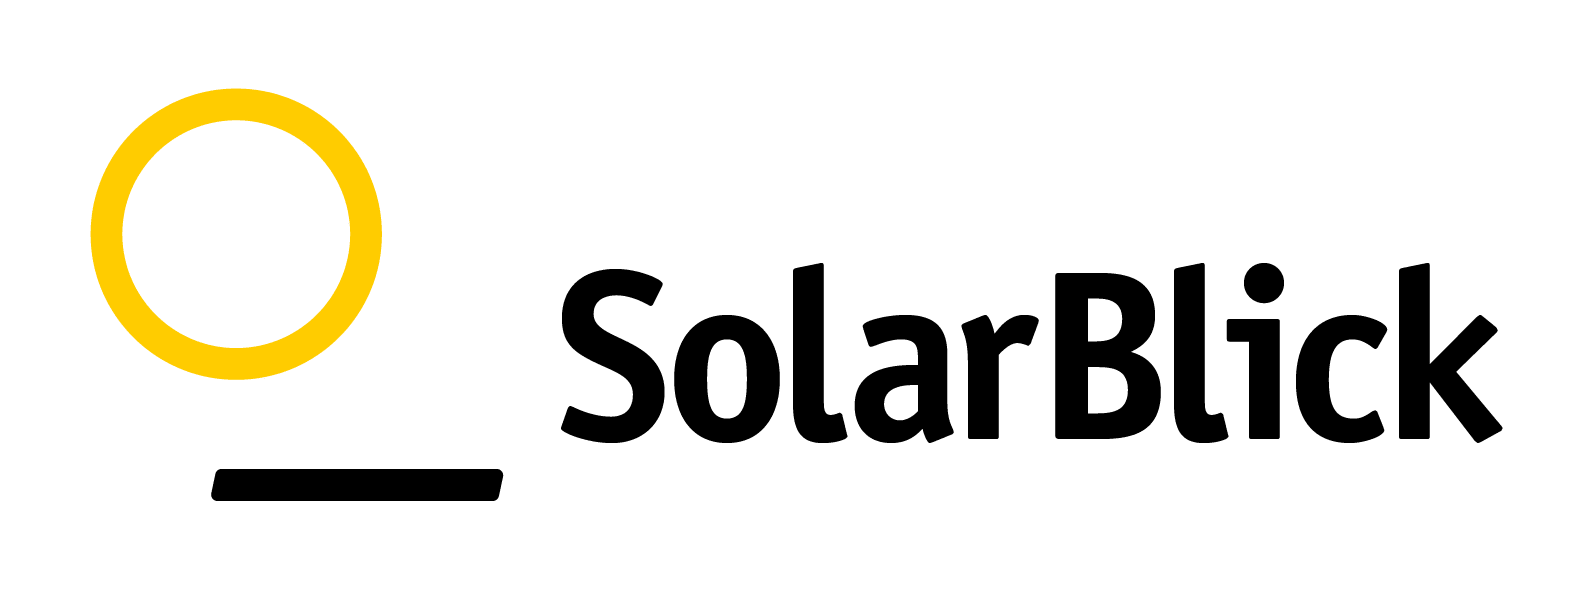 SolarBlick GmbH logo